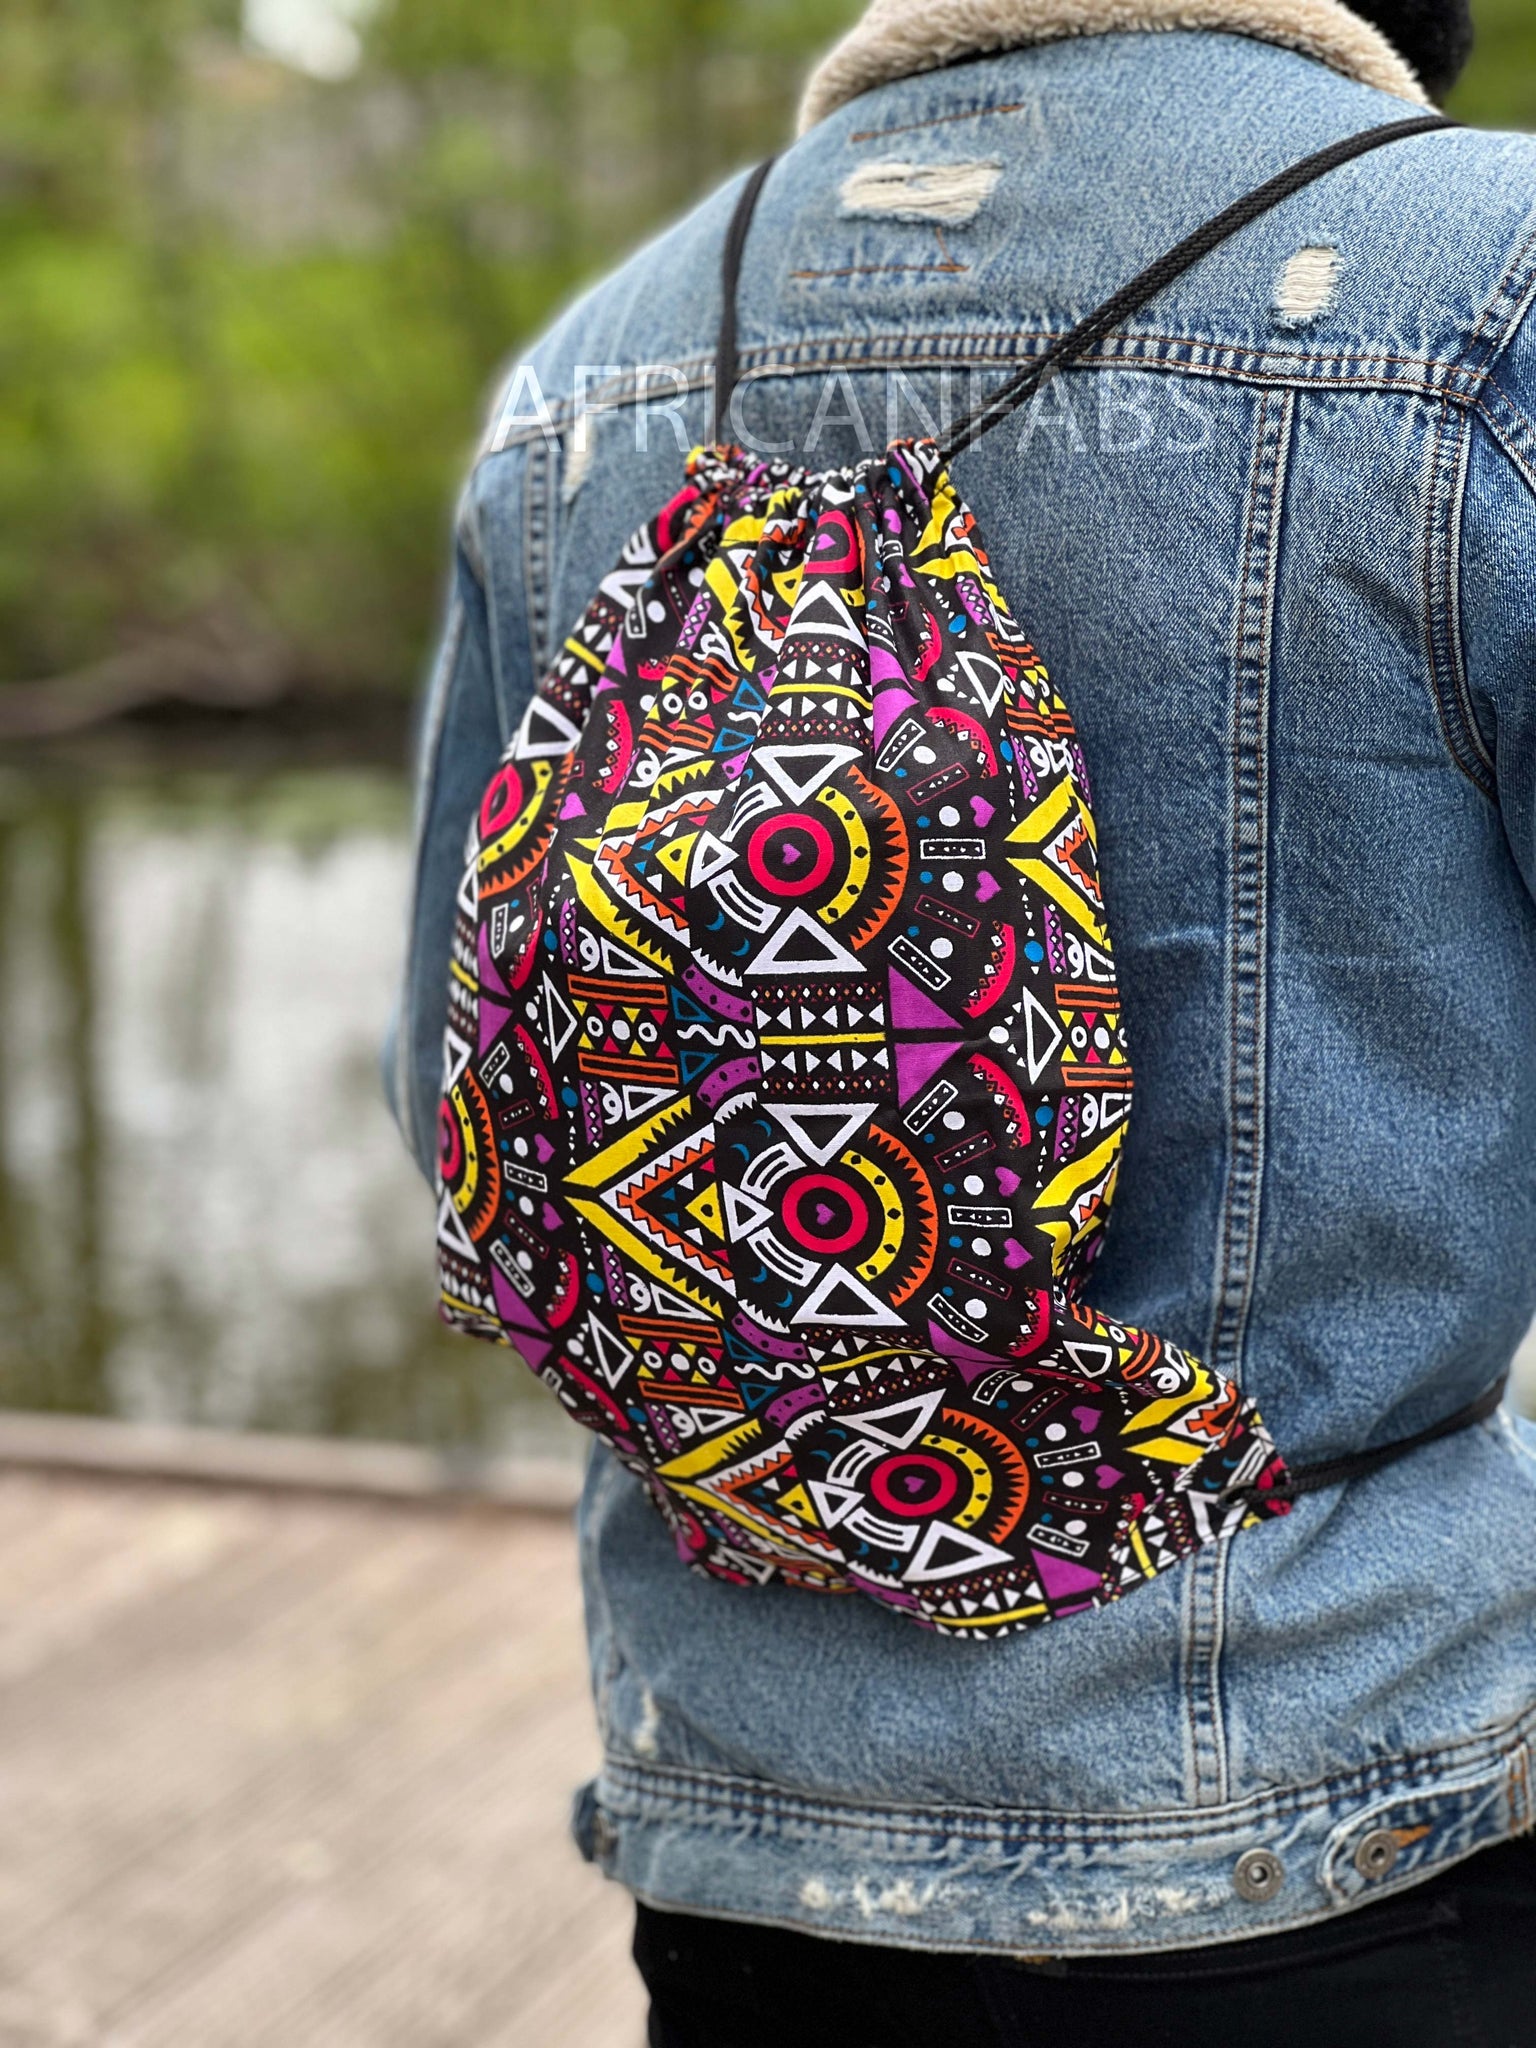 African Print Drawstring Bag / Gym Sack / School bag / Ankara Backpack / Festival Bag - Yellow / purple Tribal print